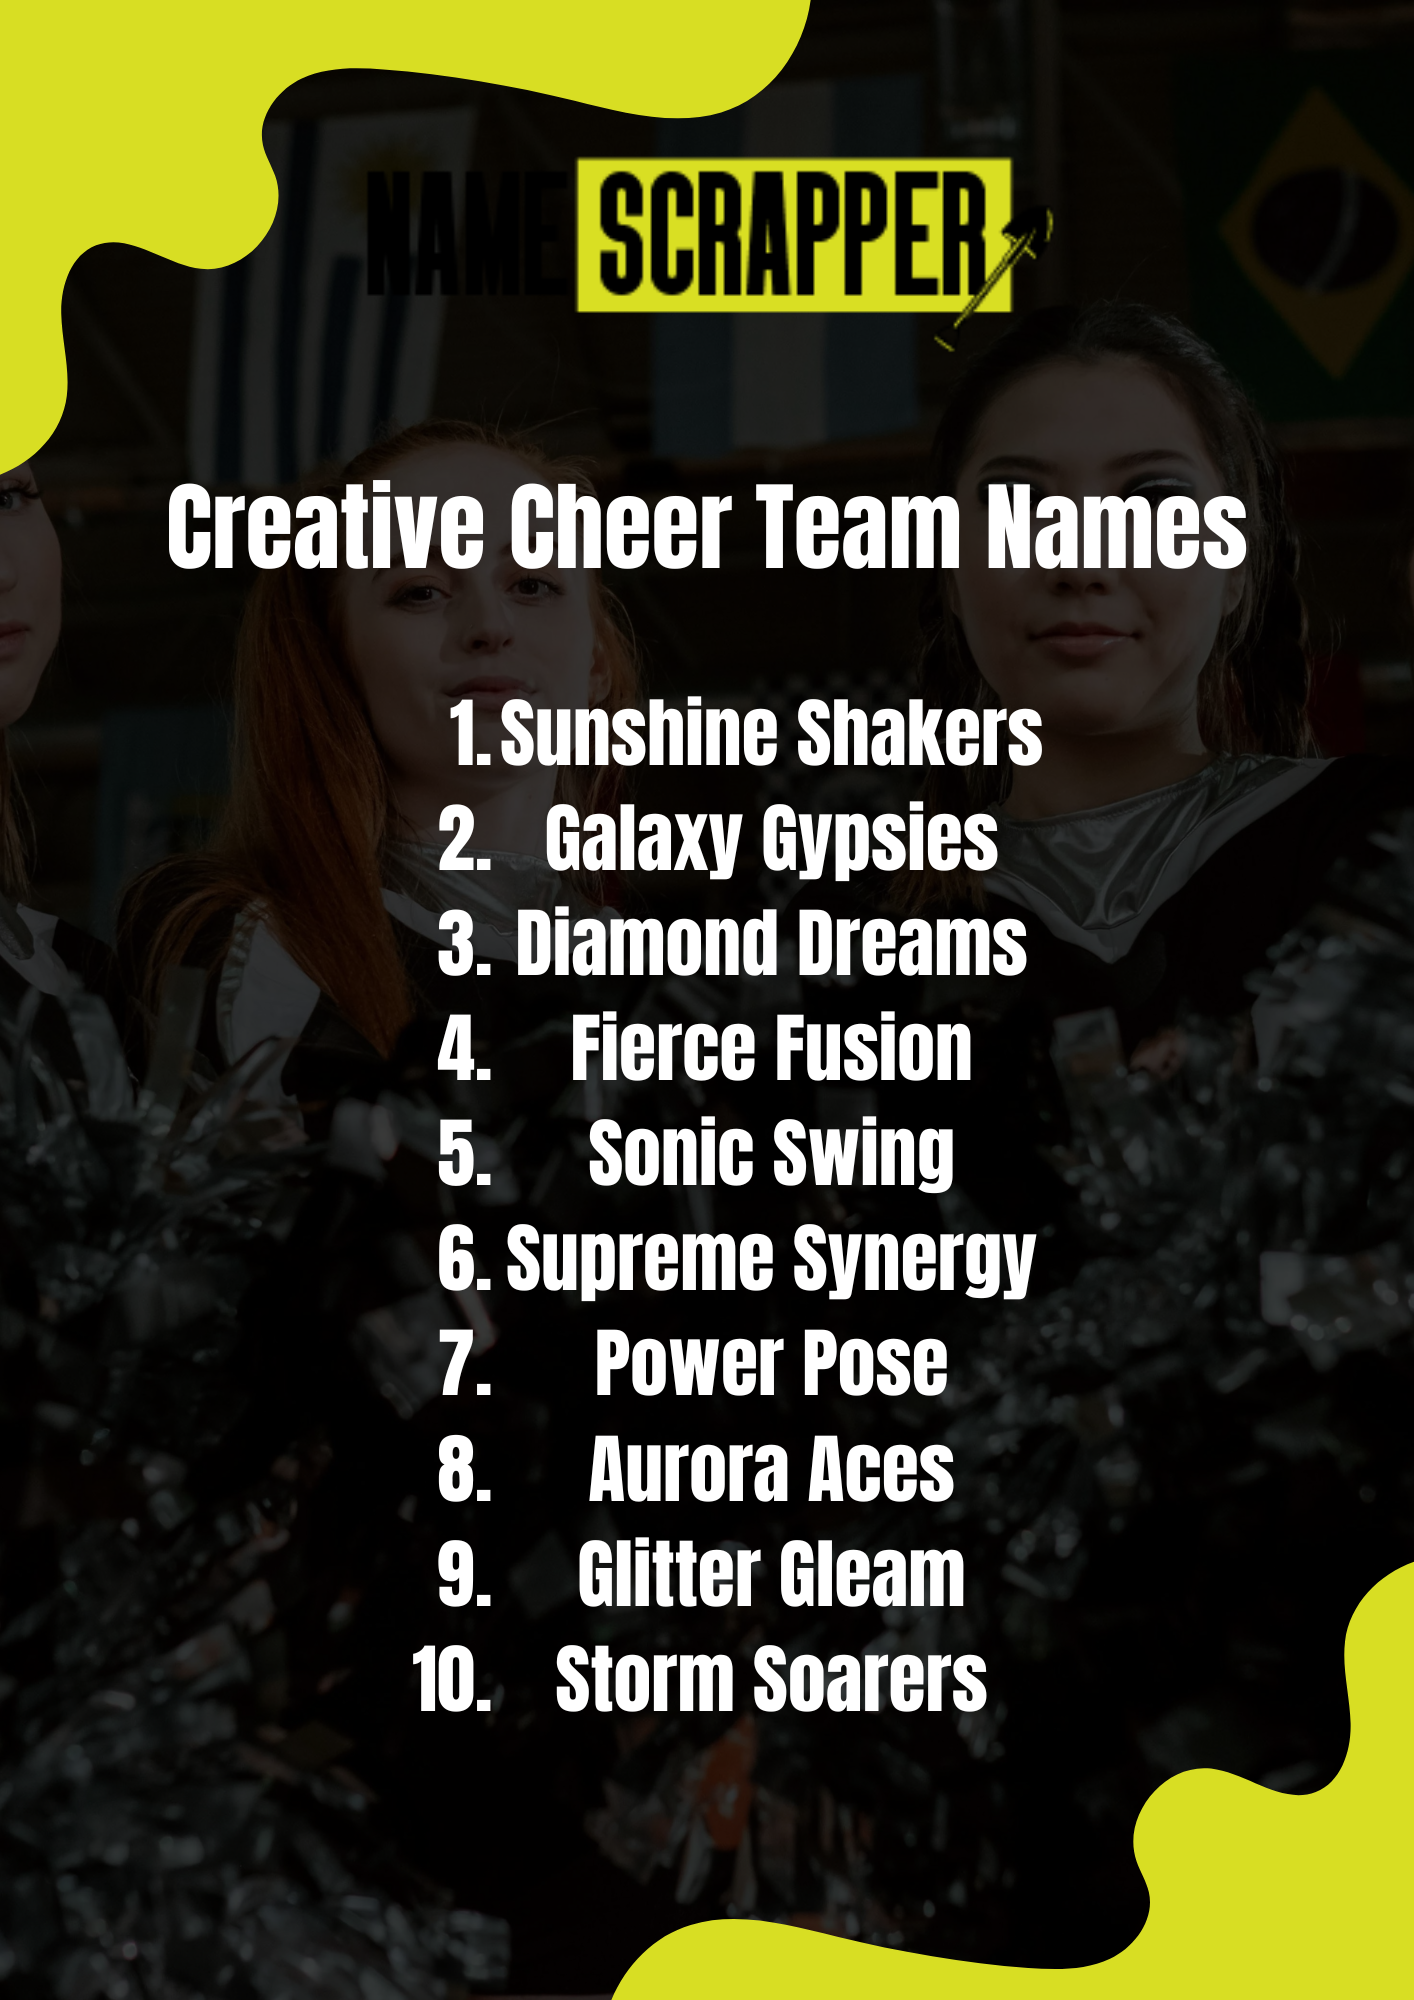 Creative Cheer Team Names